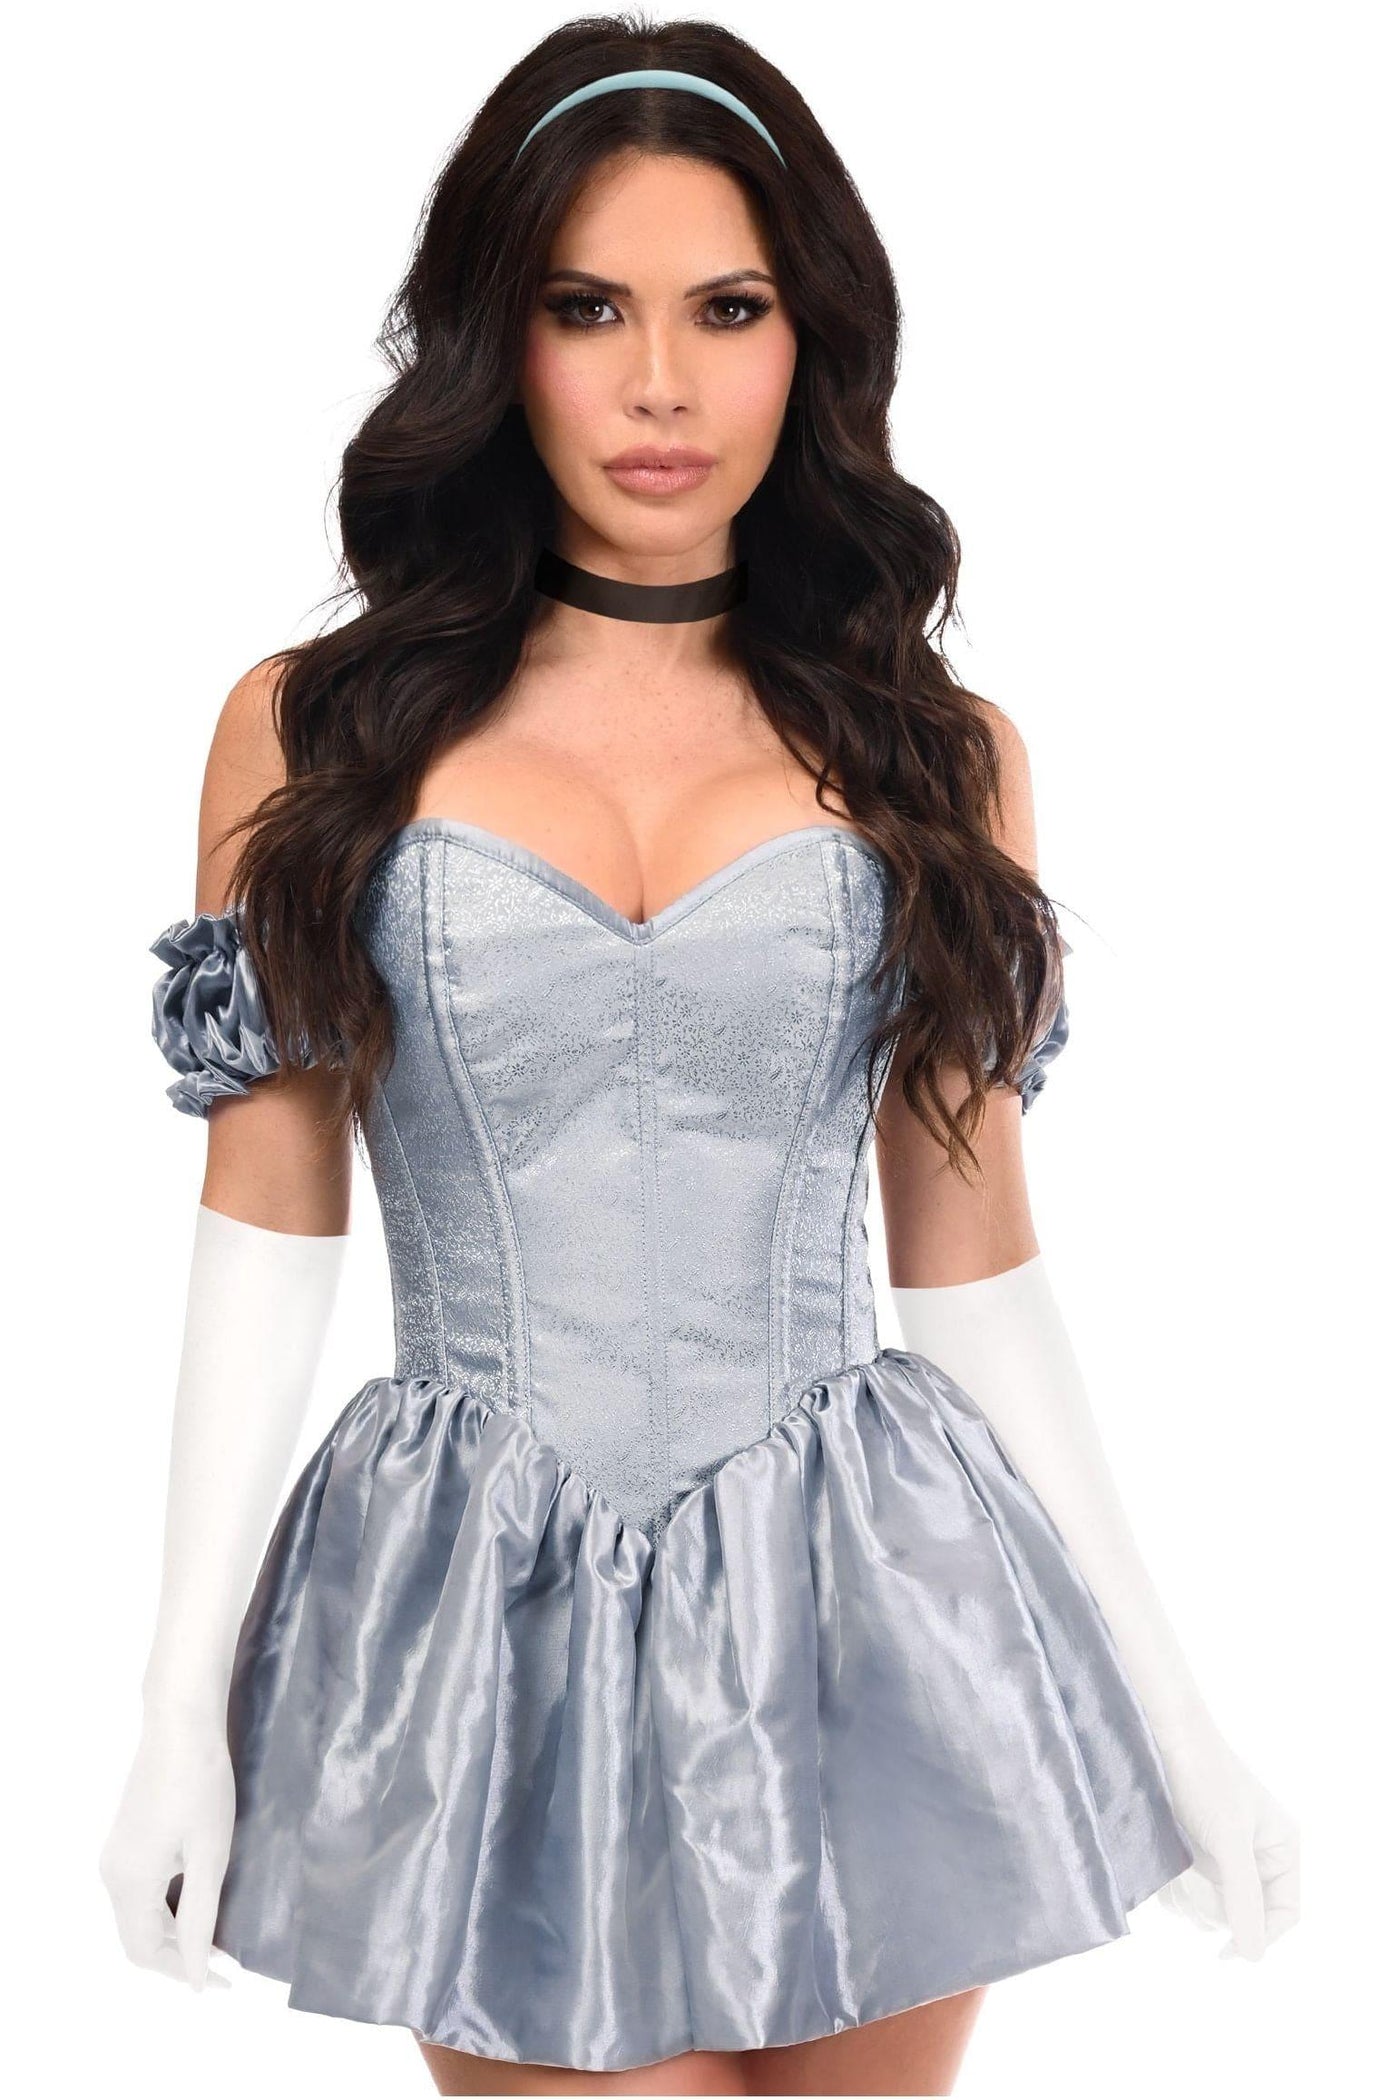 Top Drawer 4 PC Storybook Princess Corset Dress Costume - AMIClubwear